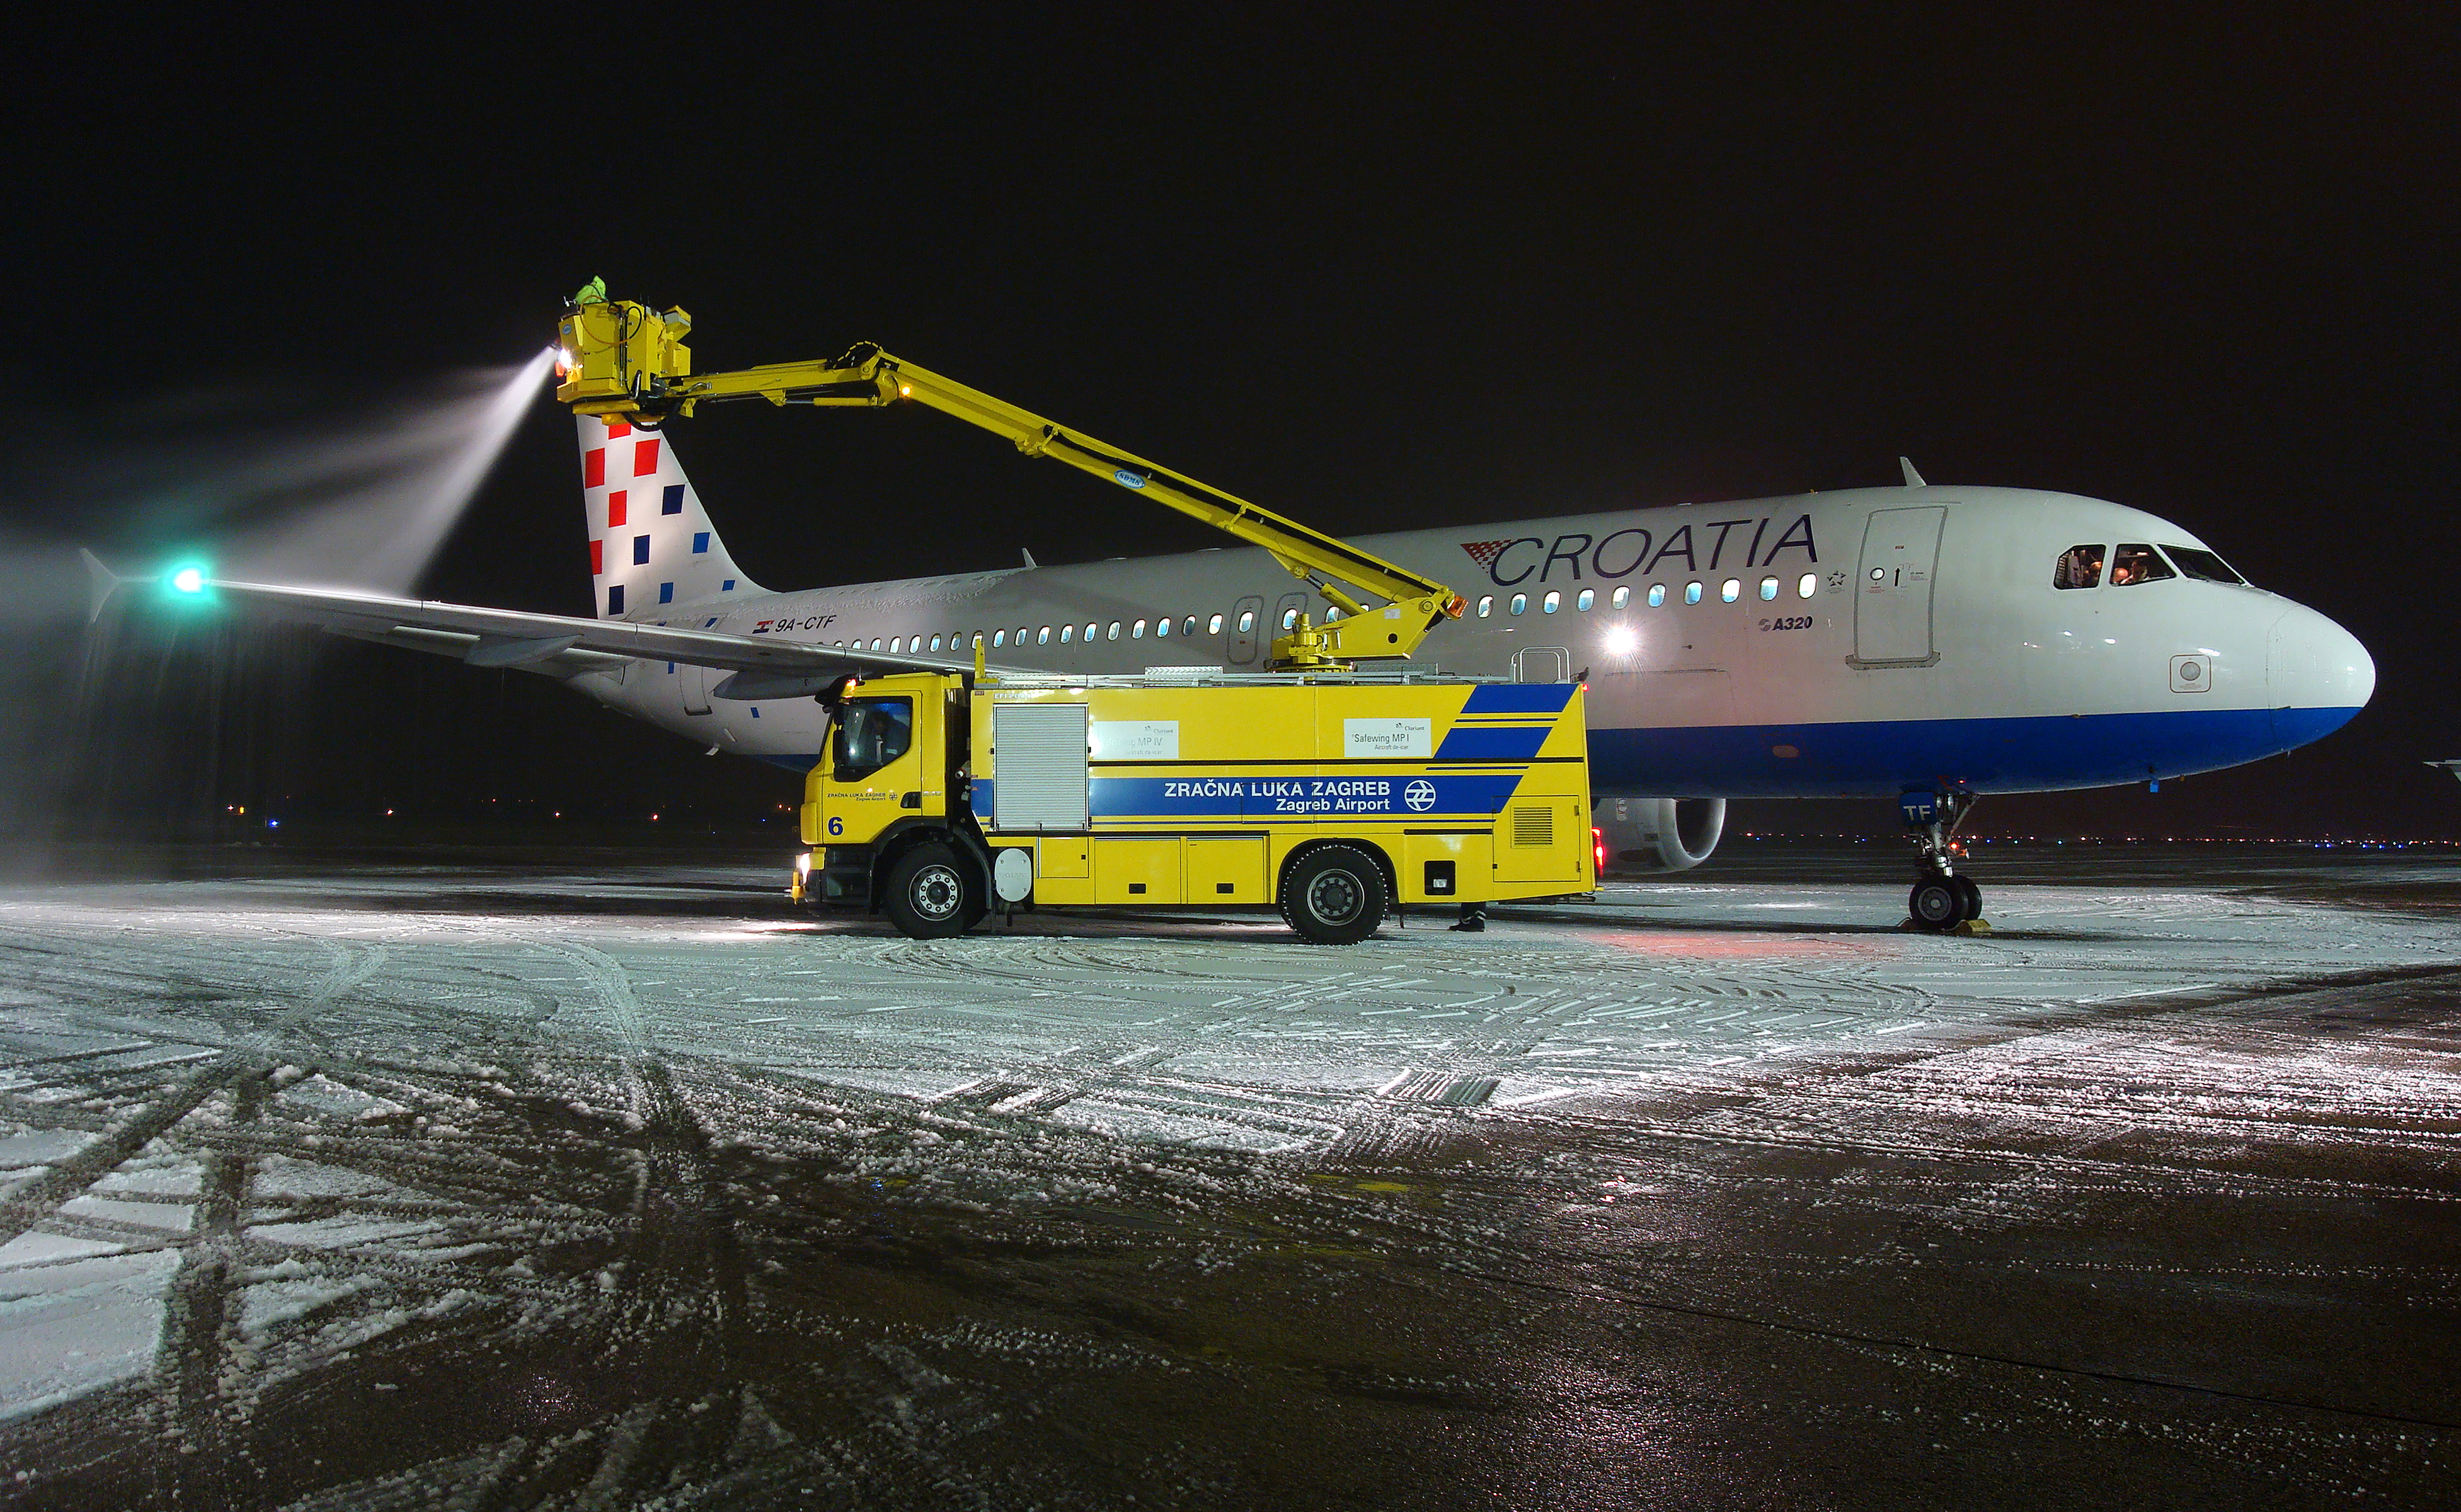 De-icing Croatia Airlines